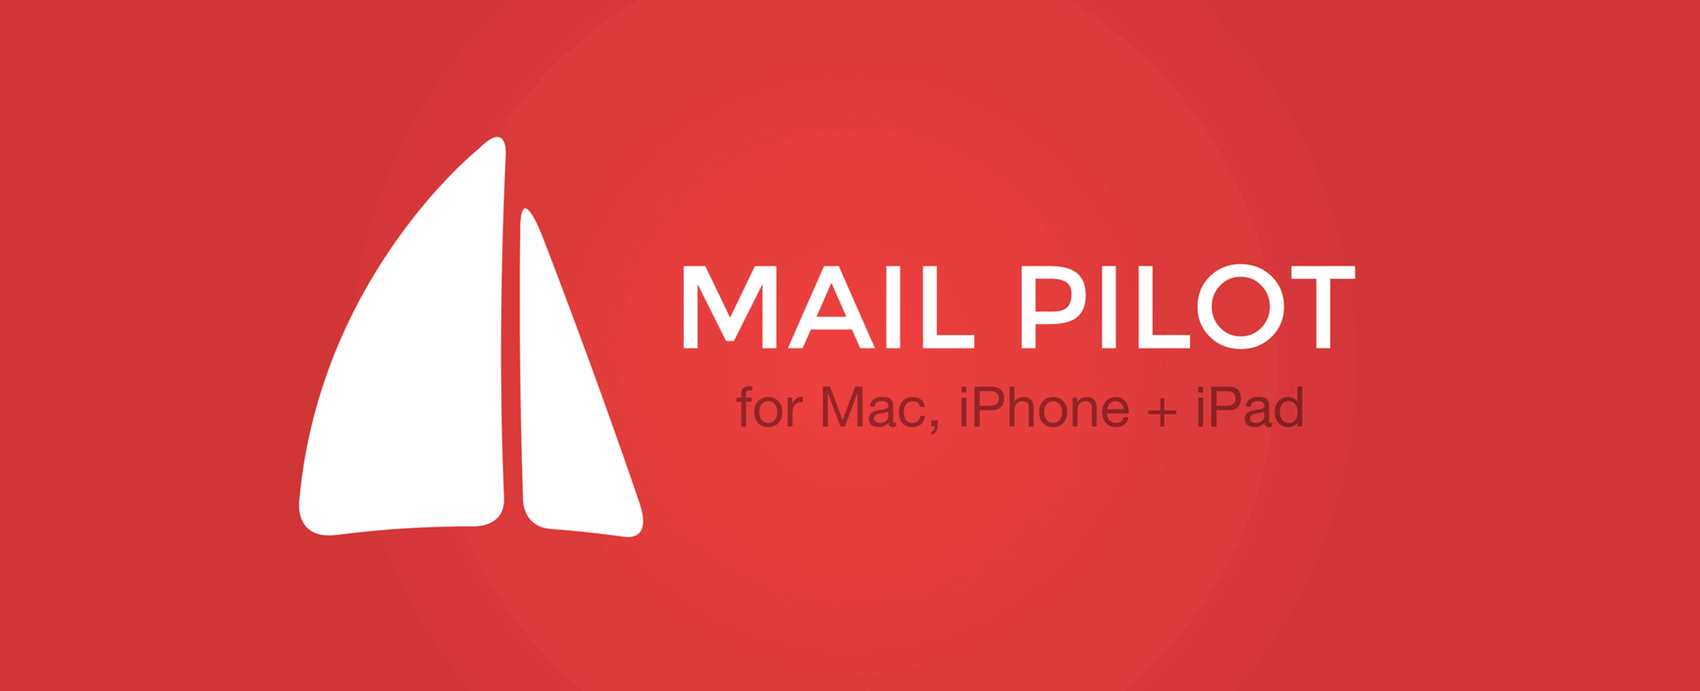 mail pilot 2 mac review